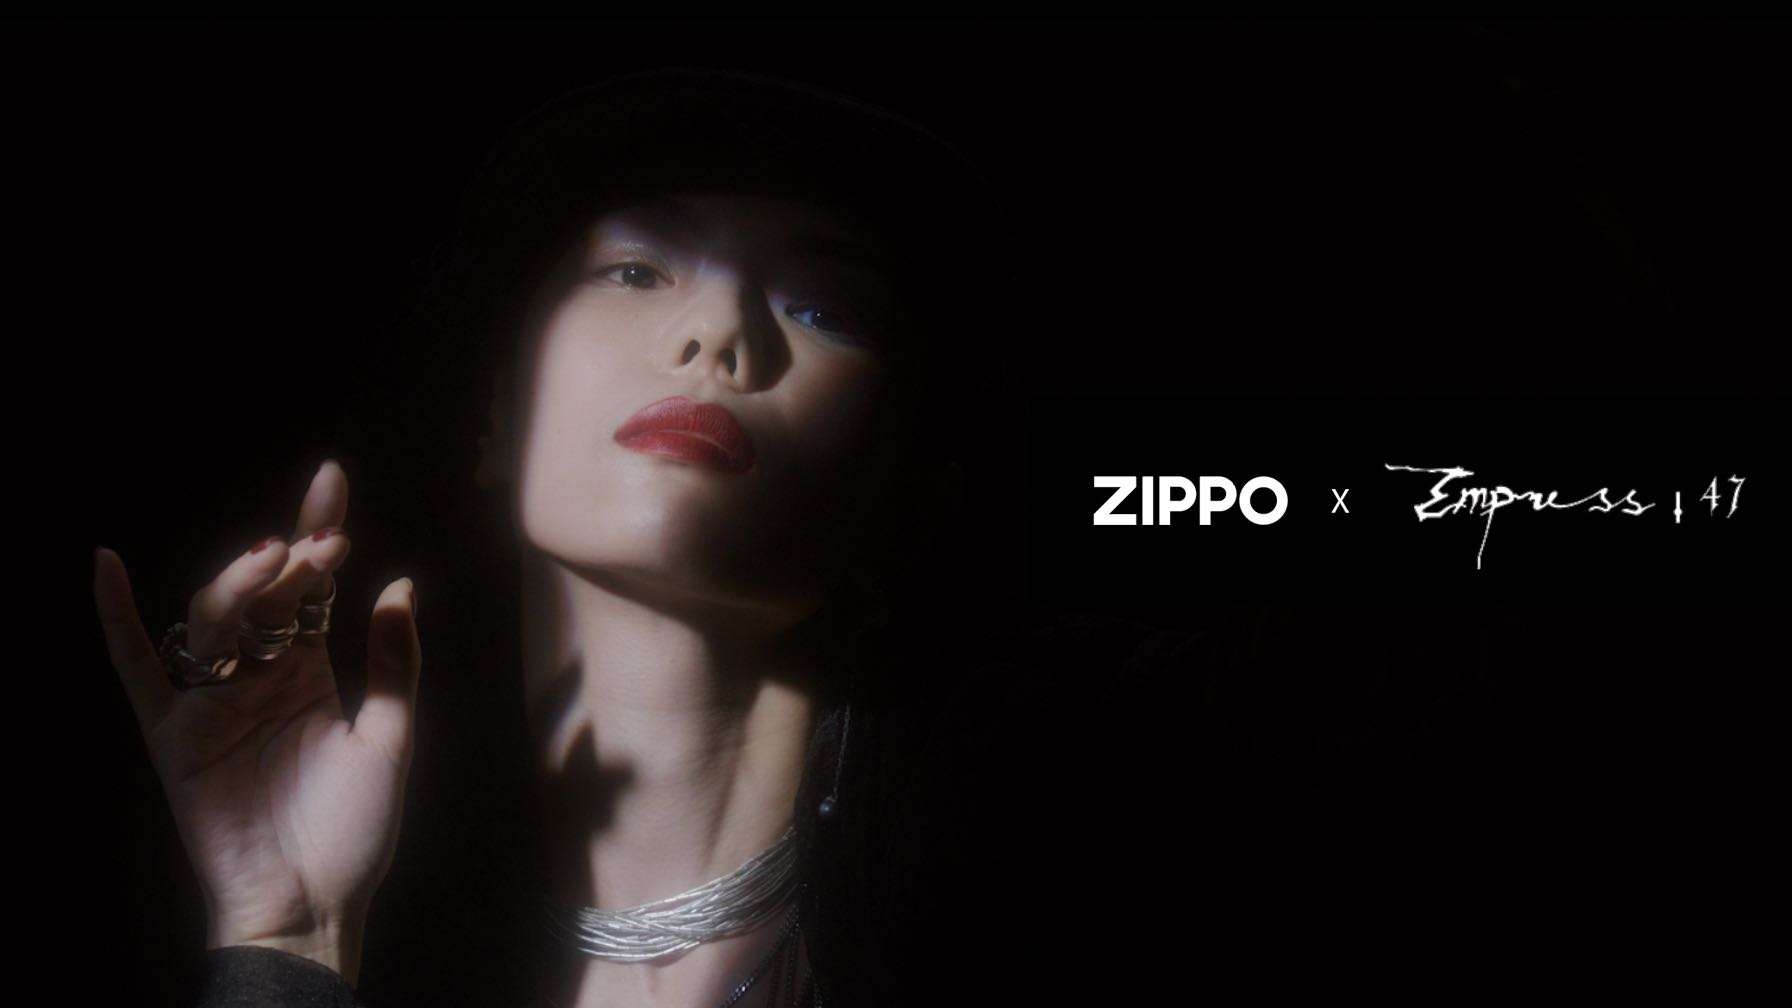 Zippo X Empress47 ｜羁绊 DIR